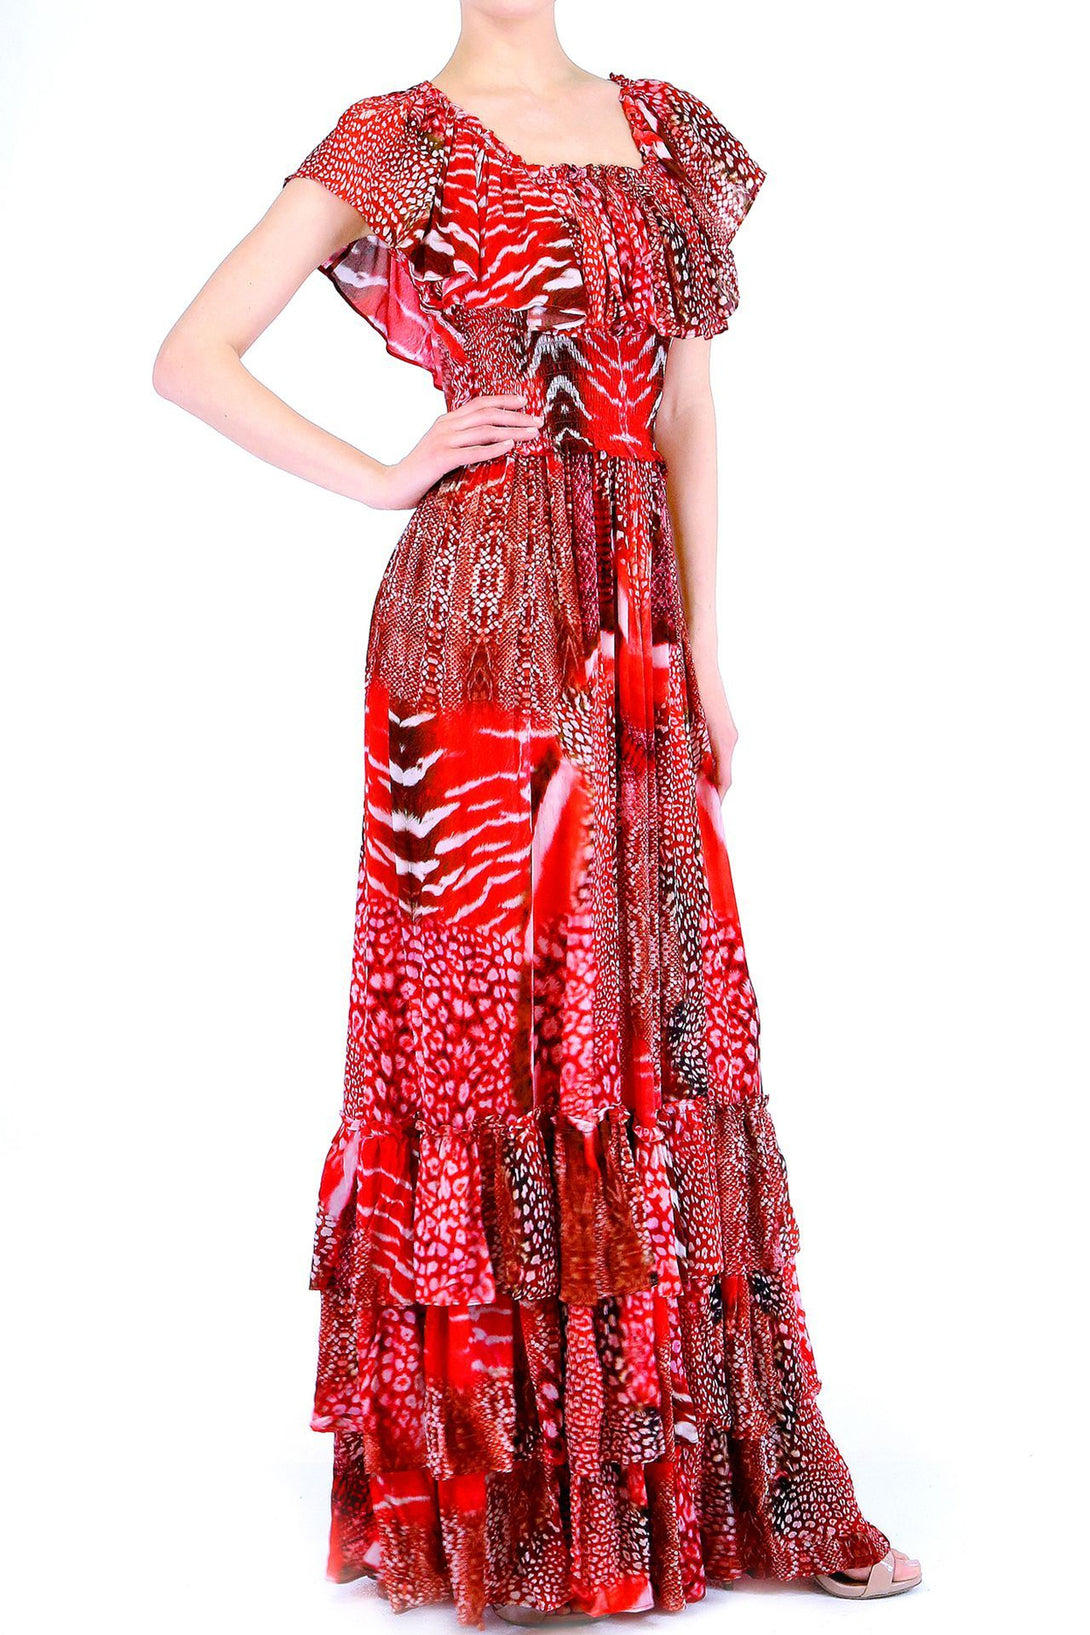   cute red dresses, formal dresses for women, plus size maxi dresses, Shahida Parides,